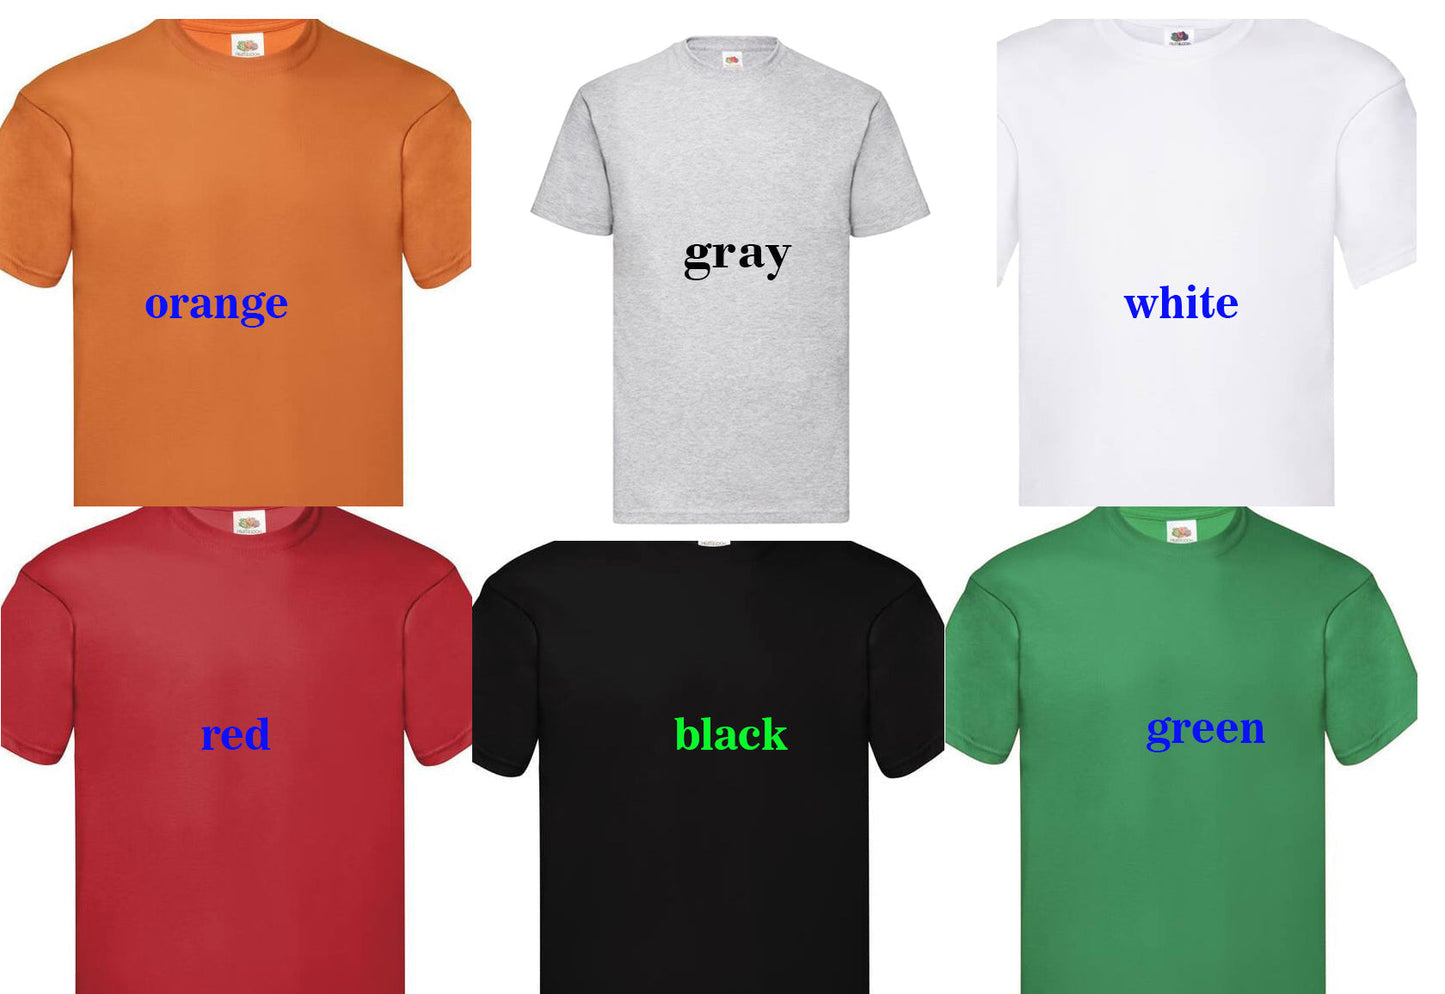 290. LIPS, Custom Made Shirt, Personalized T-Shirt, Custom Text, Make Your Own Shirt, Custom Tee